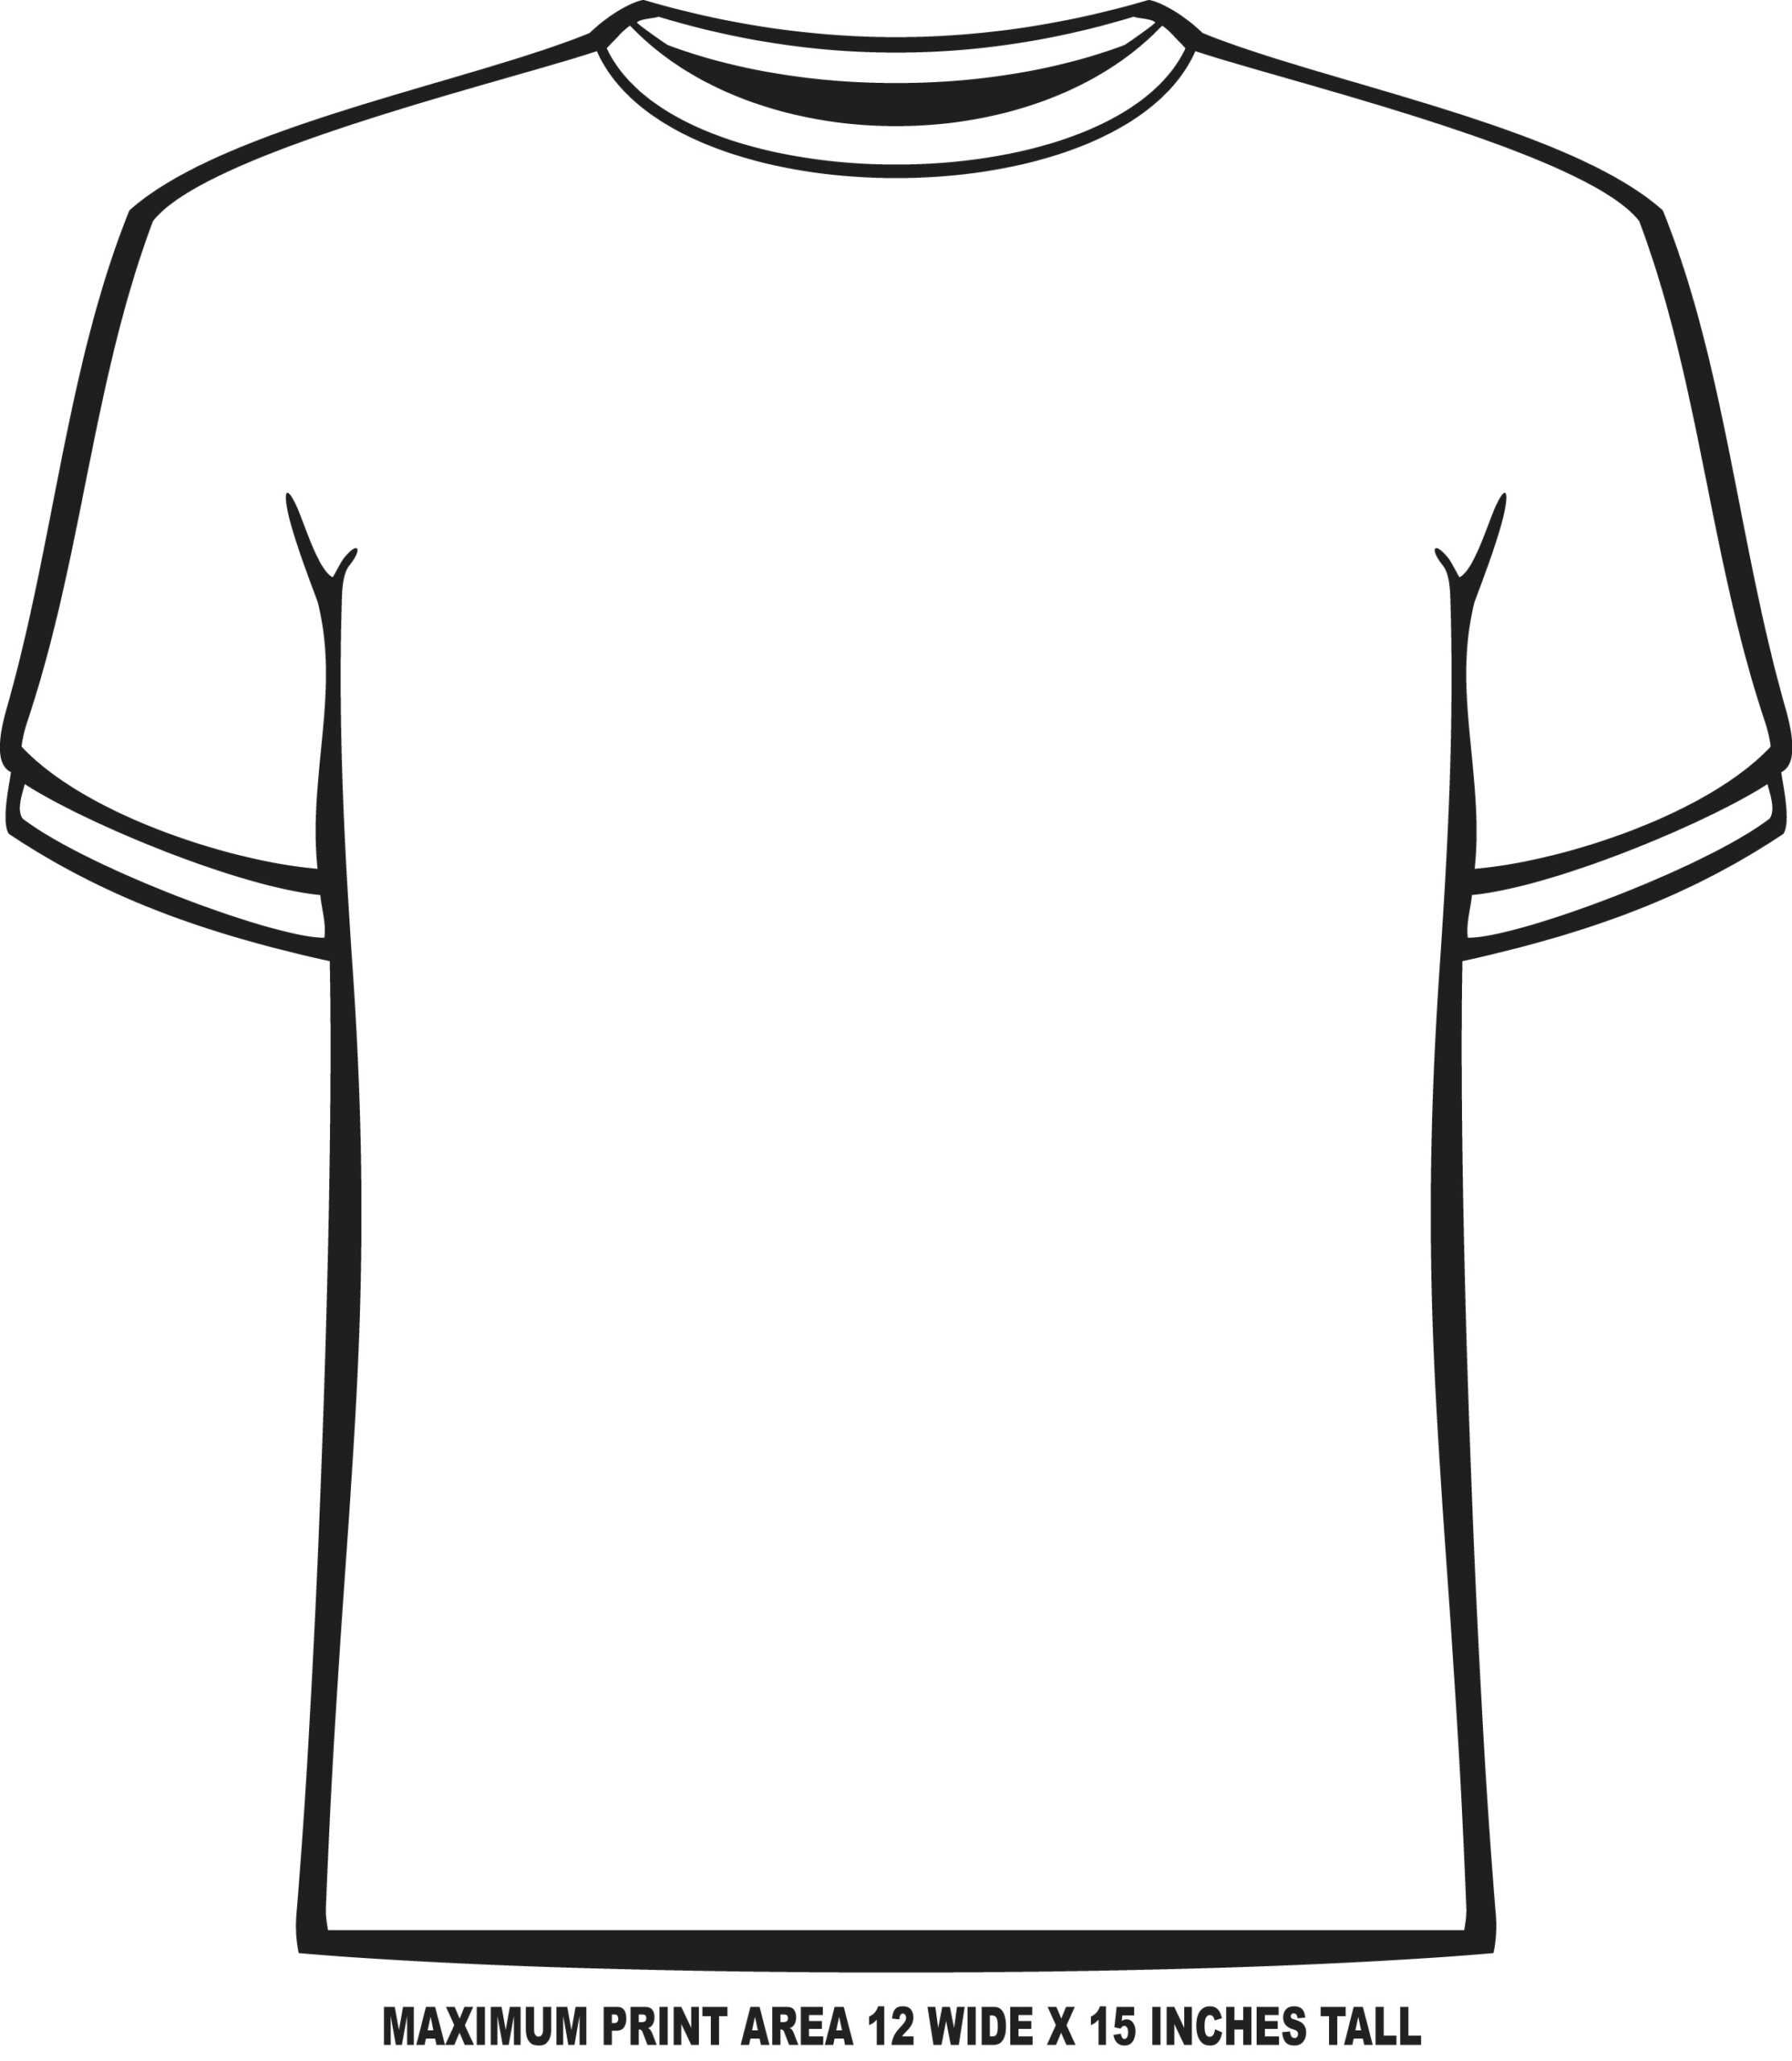 Blank Tshirt Template Pdf - Dreamworks With Blank Tshirt Template Pdf